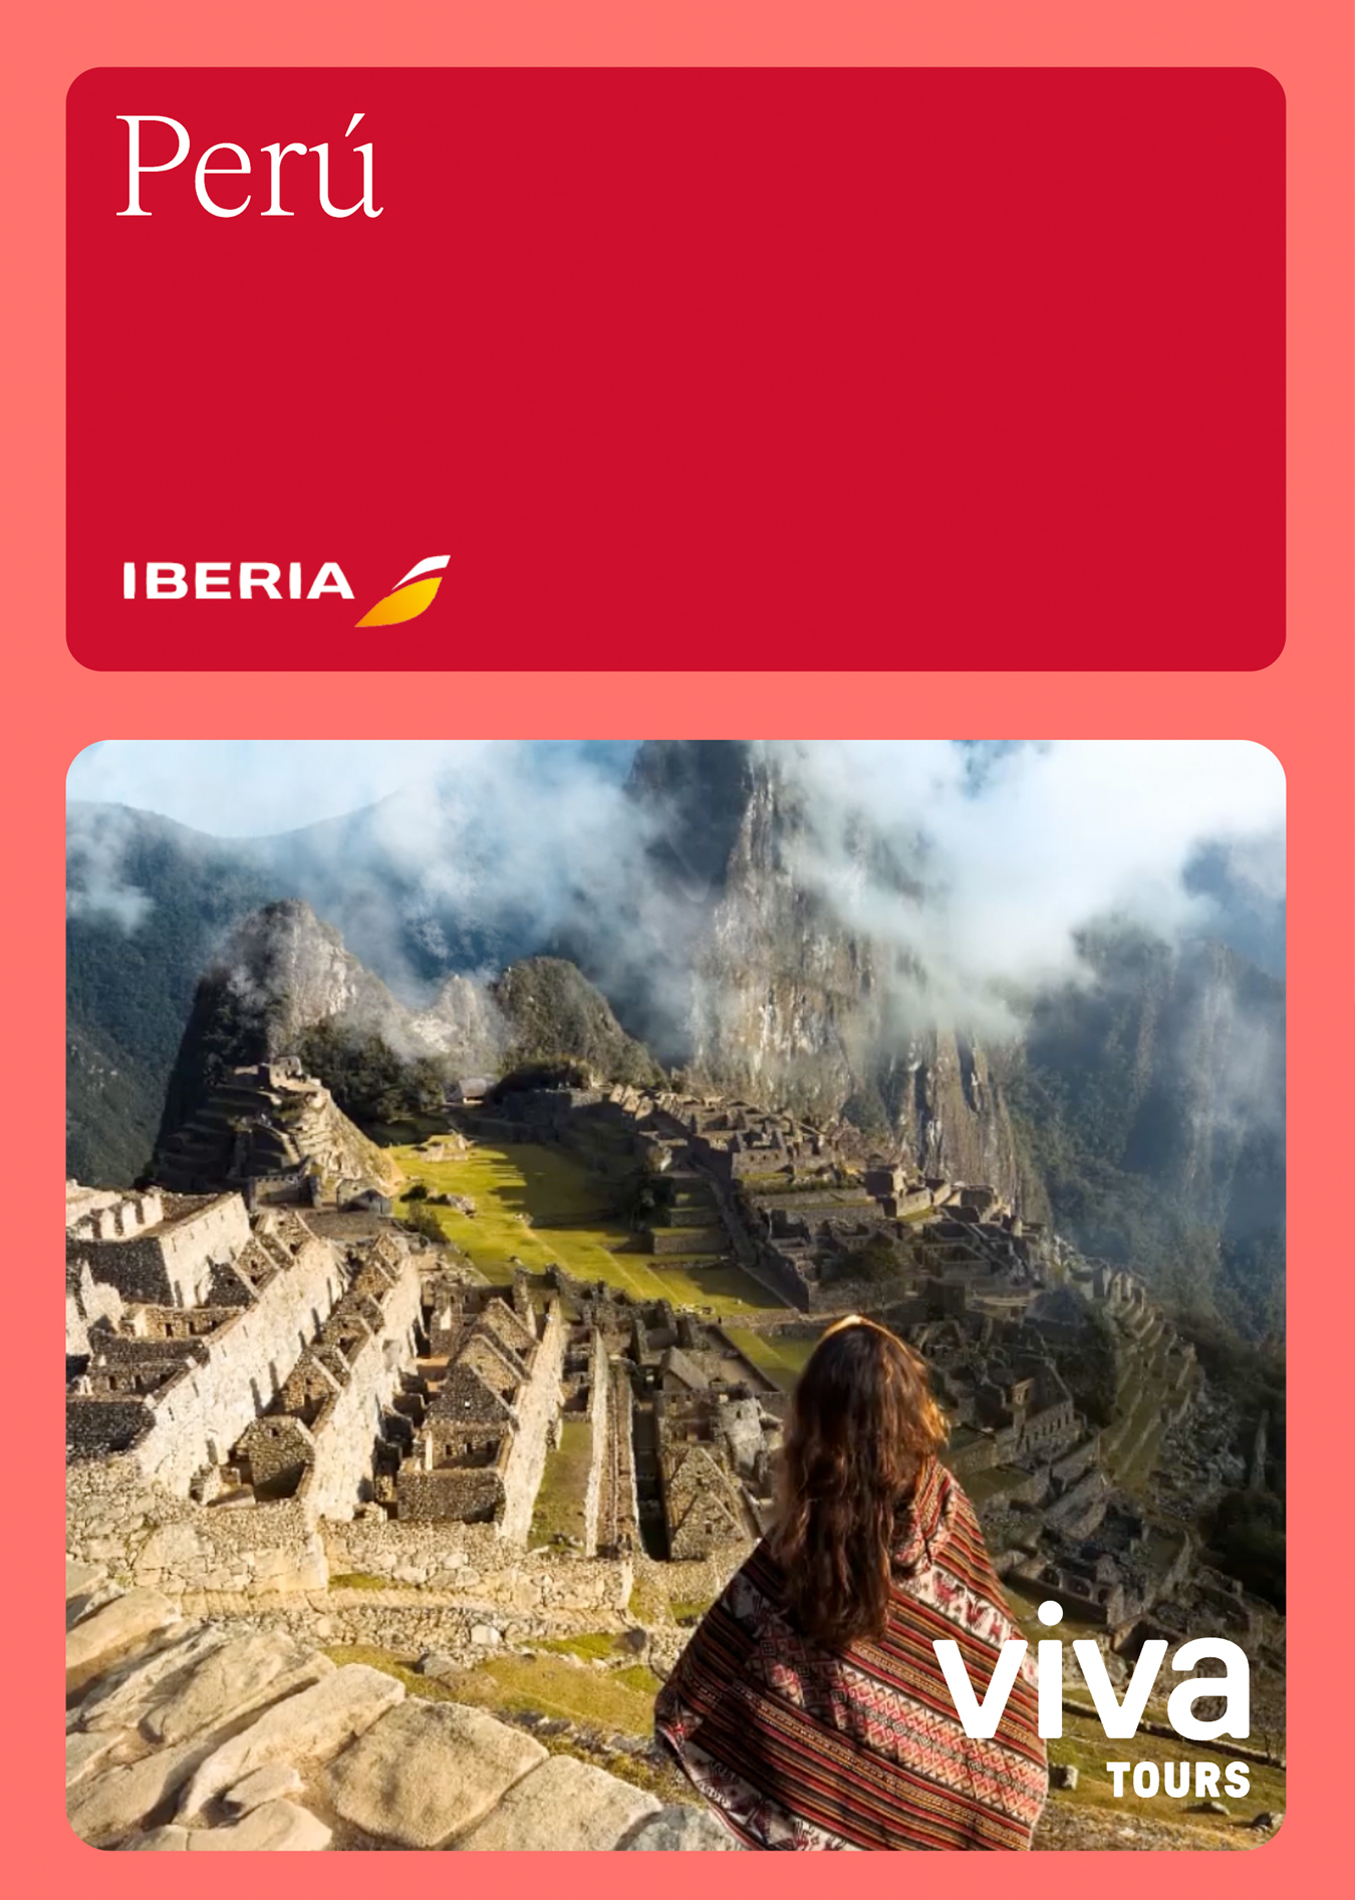 EMagazines Portfolio. Viva Tours & Iberia